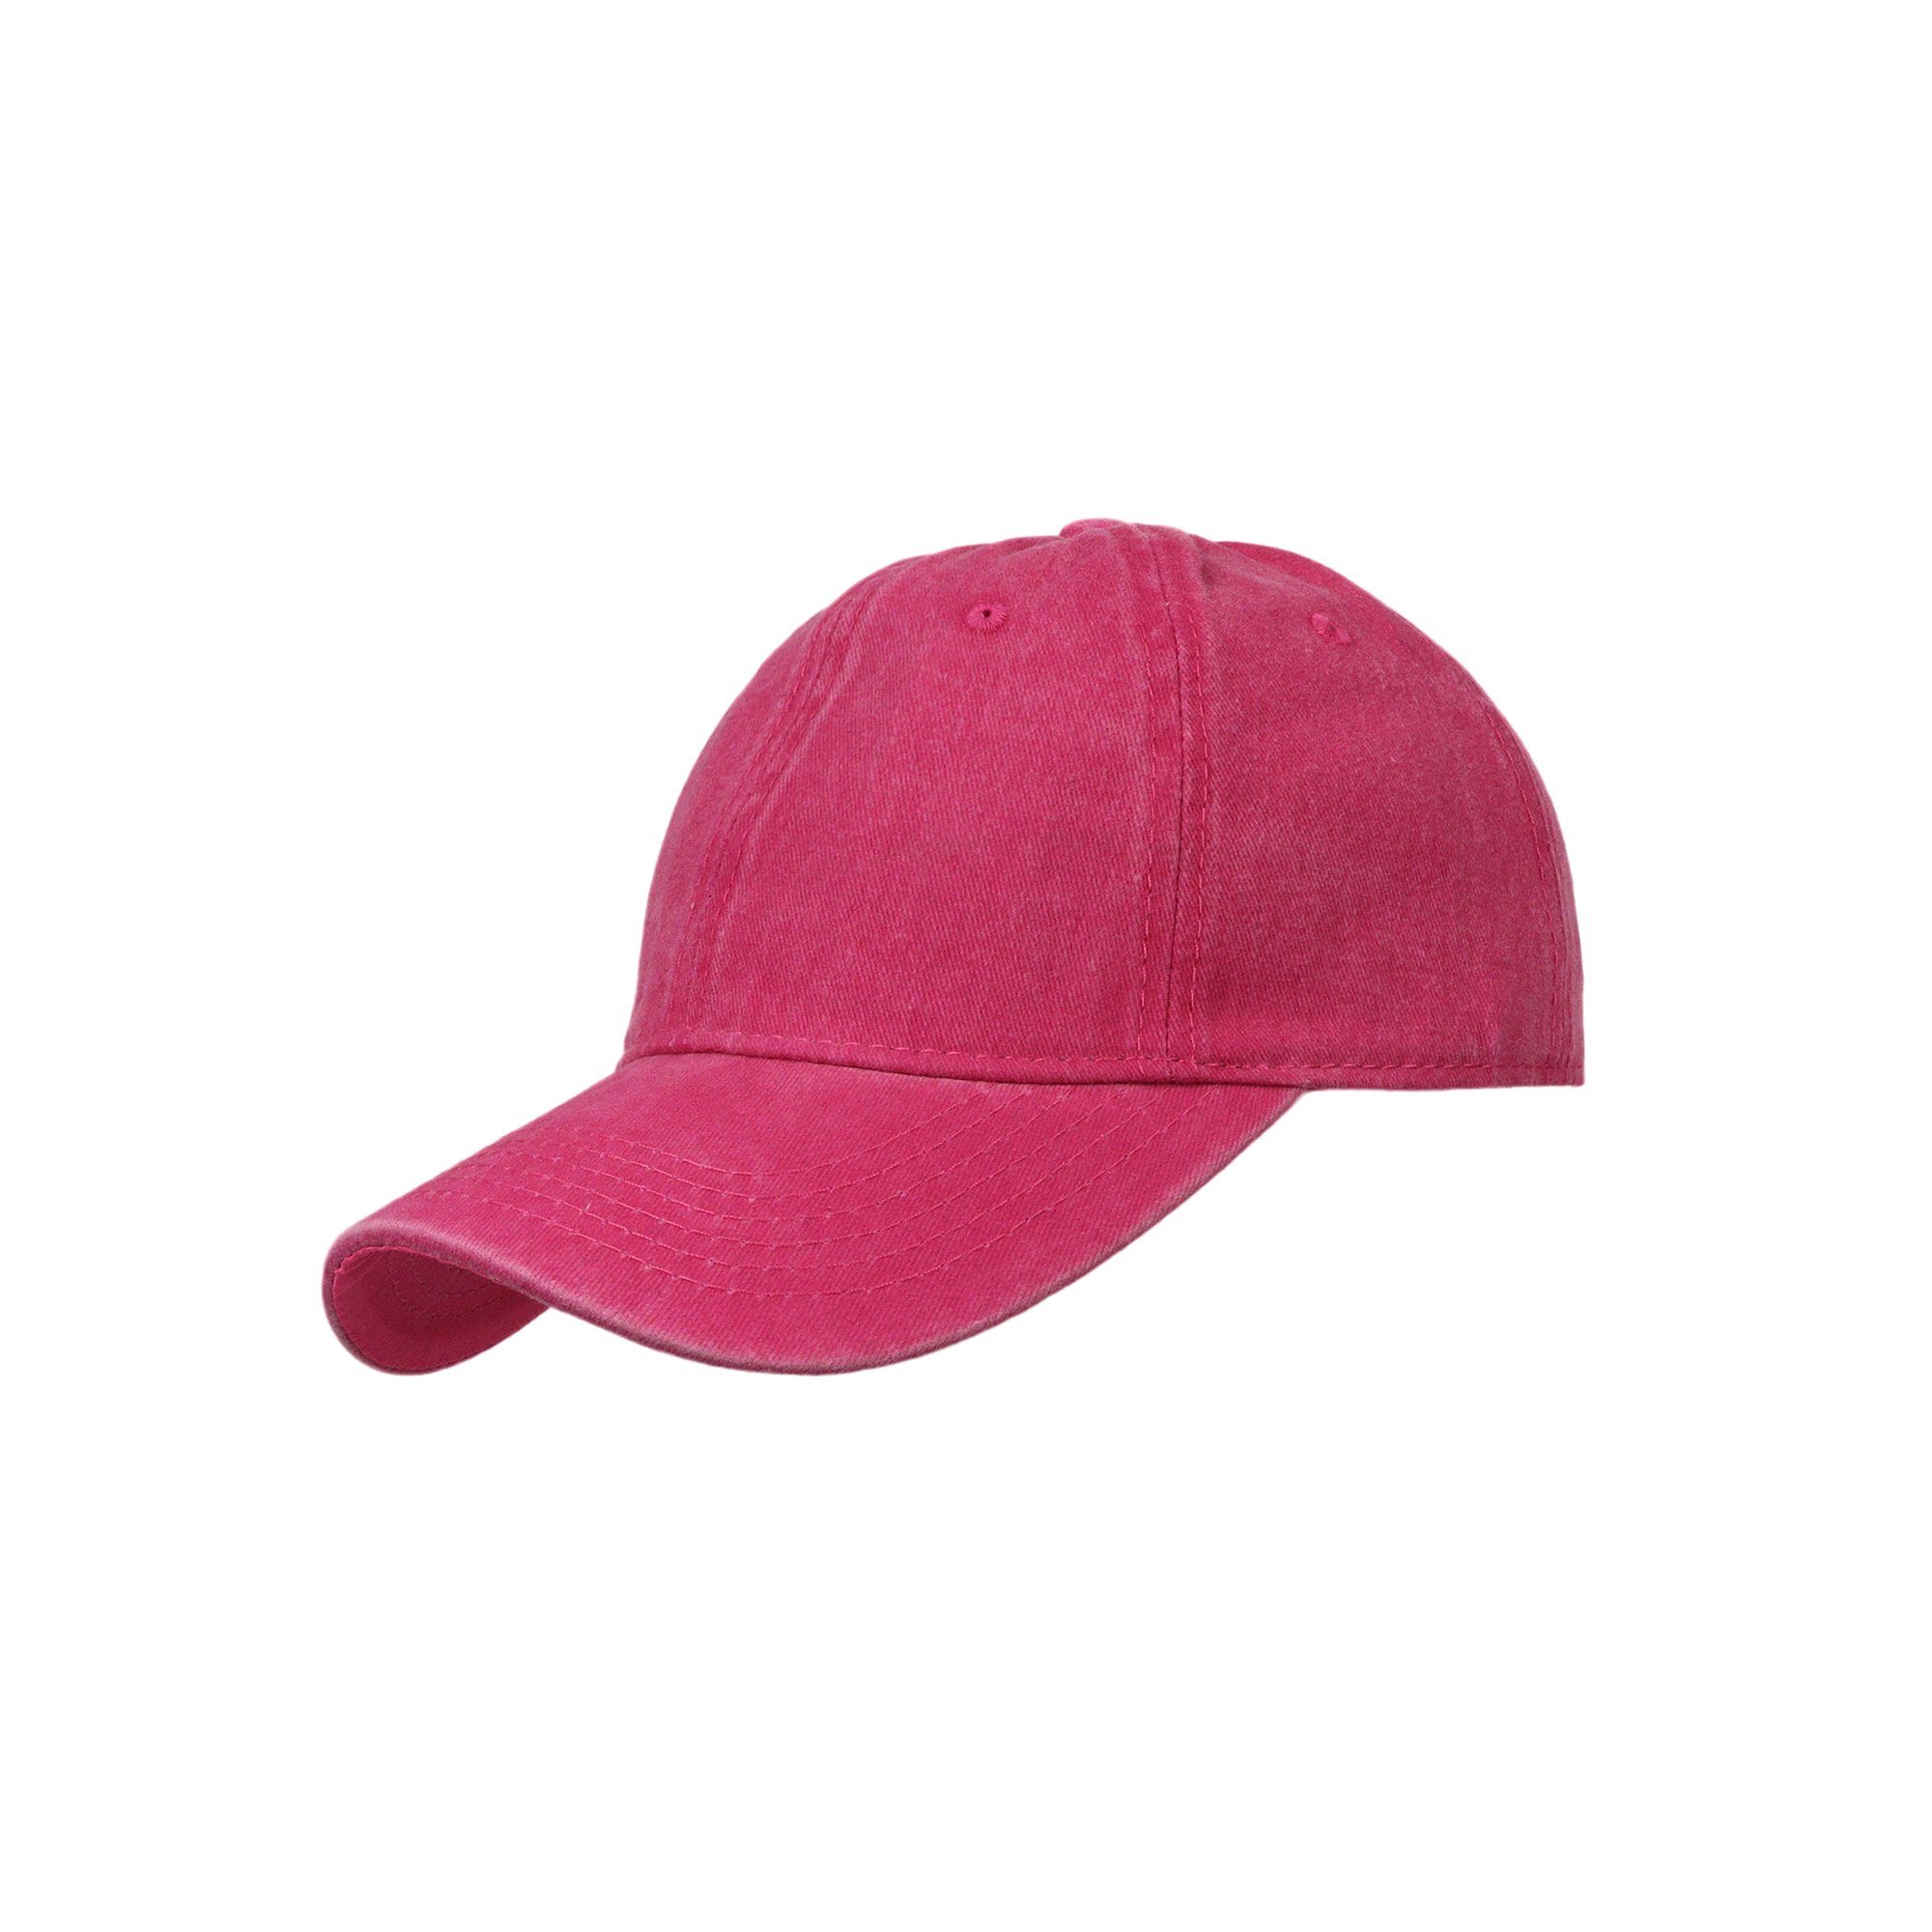 ZEBRO Baseball pink Cap Belüftungslöcher mit Base Cap